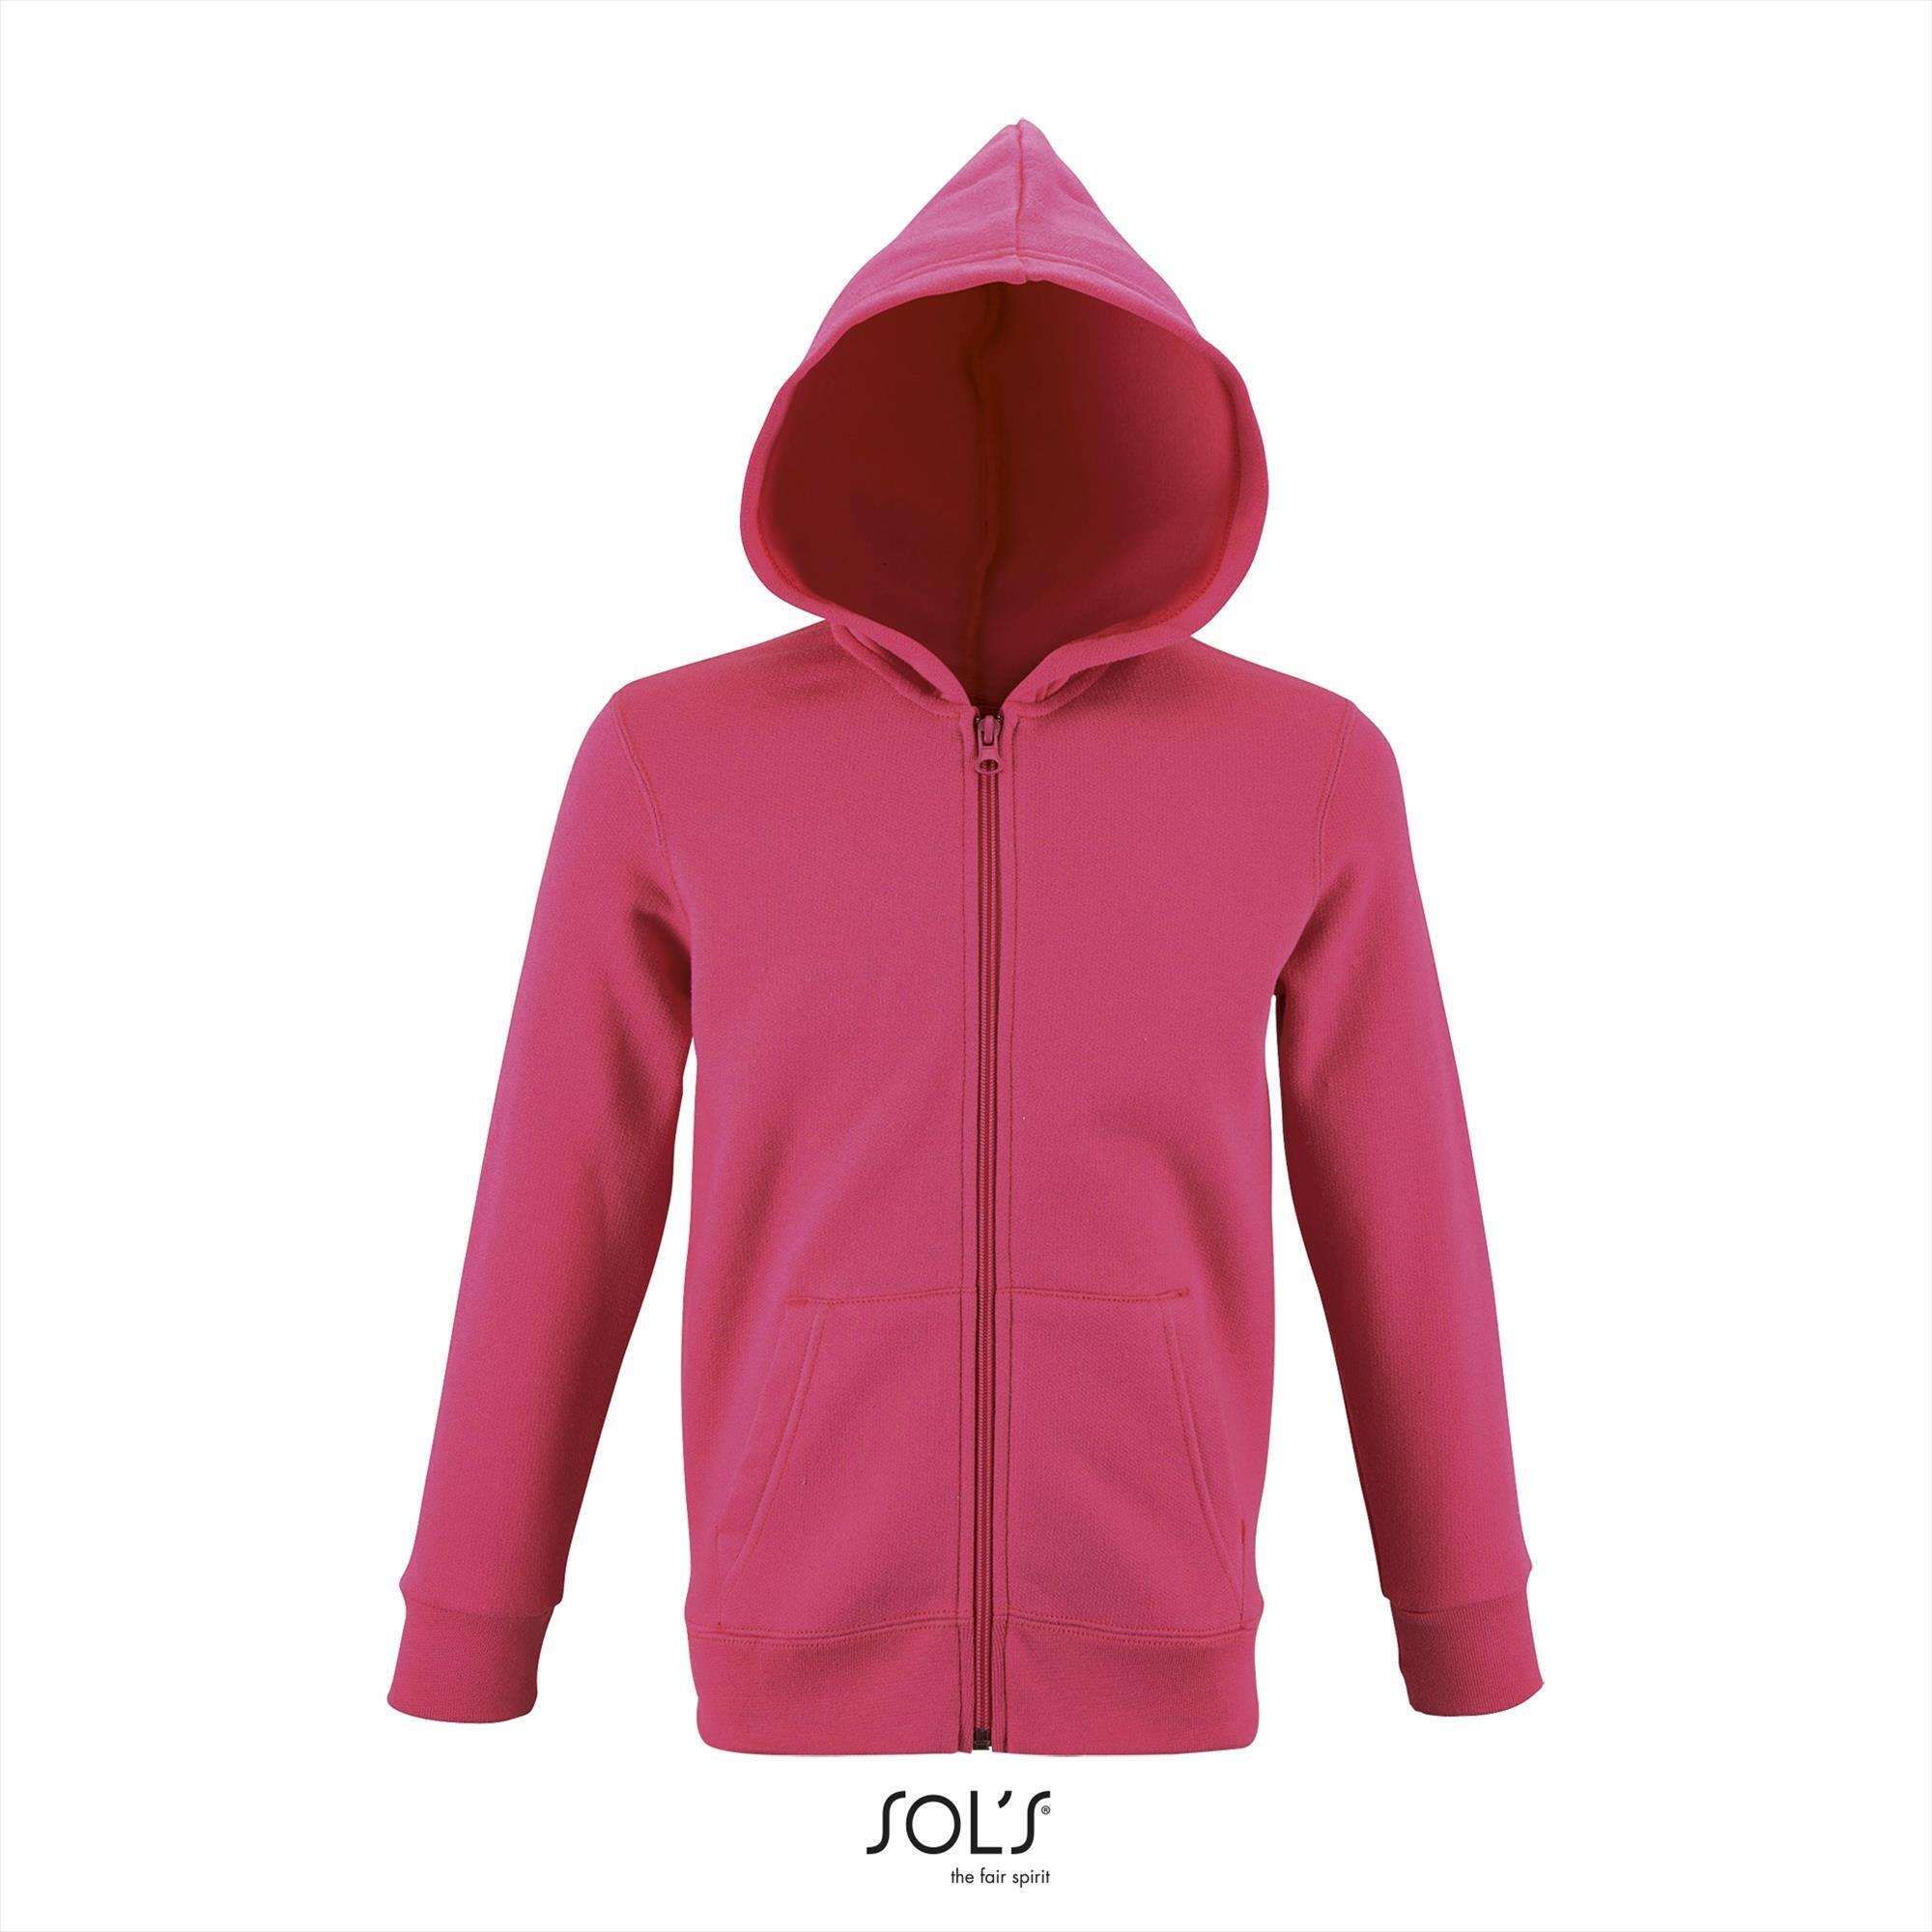 Kinder hooded sweat jacket flash roze personaliseer te bedrukken